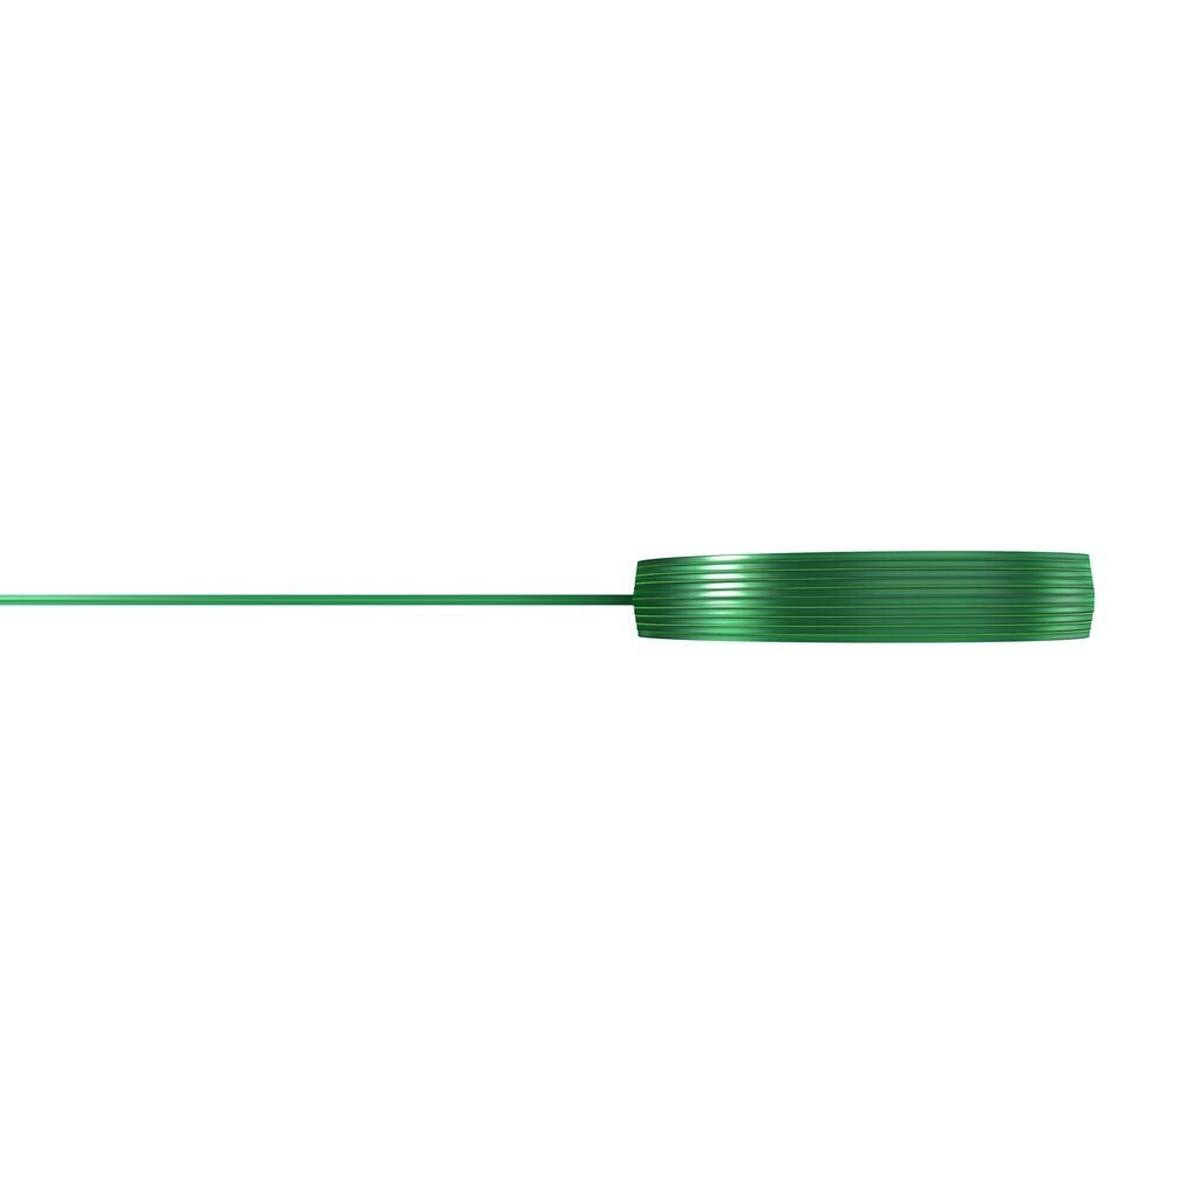  3M Finish Line veitsetön nauha vihreä 3.5mm x 50m